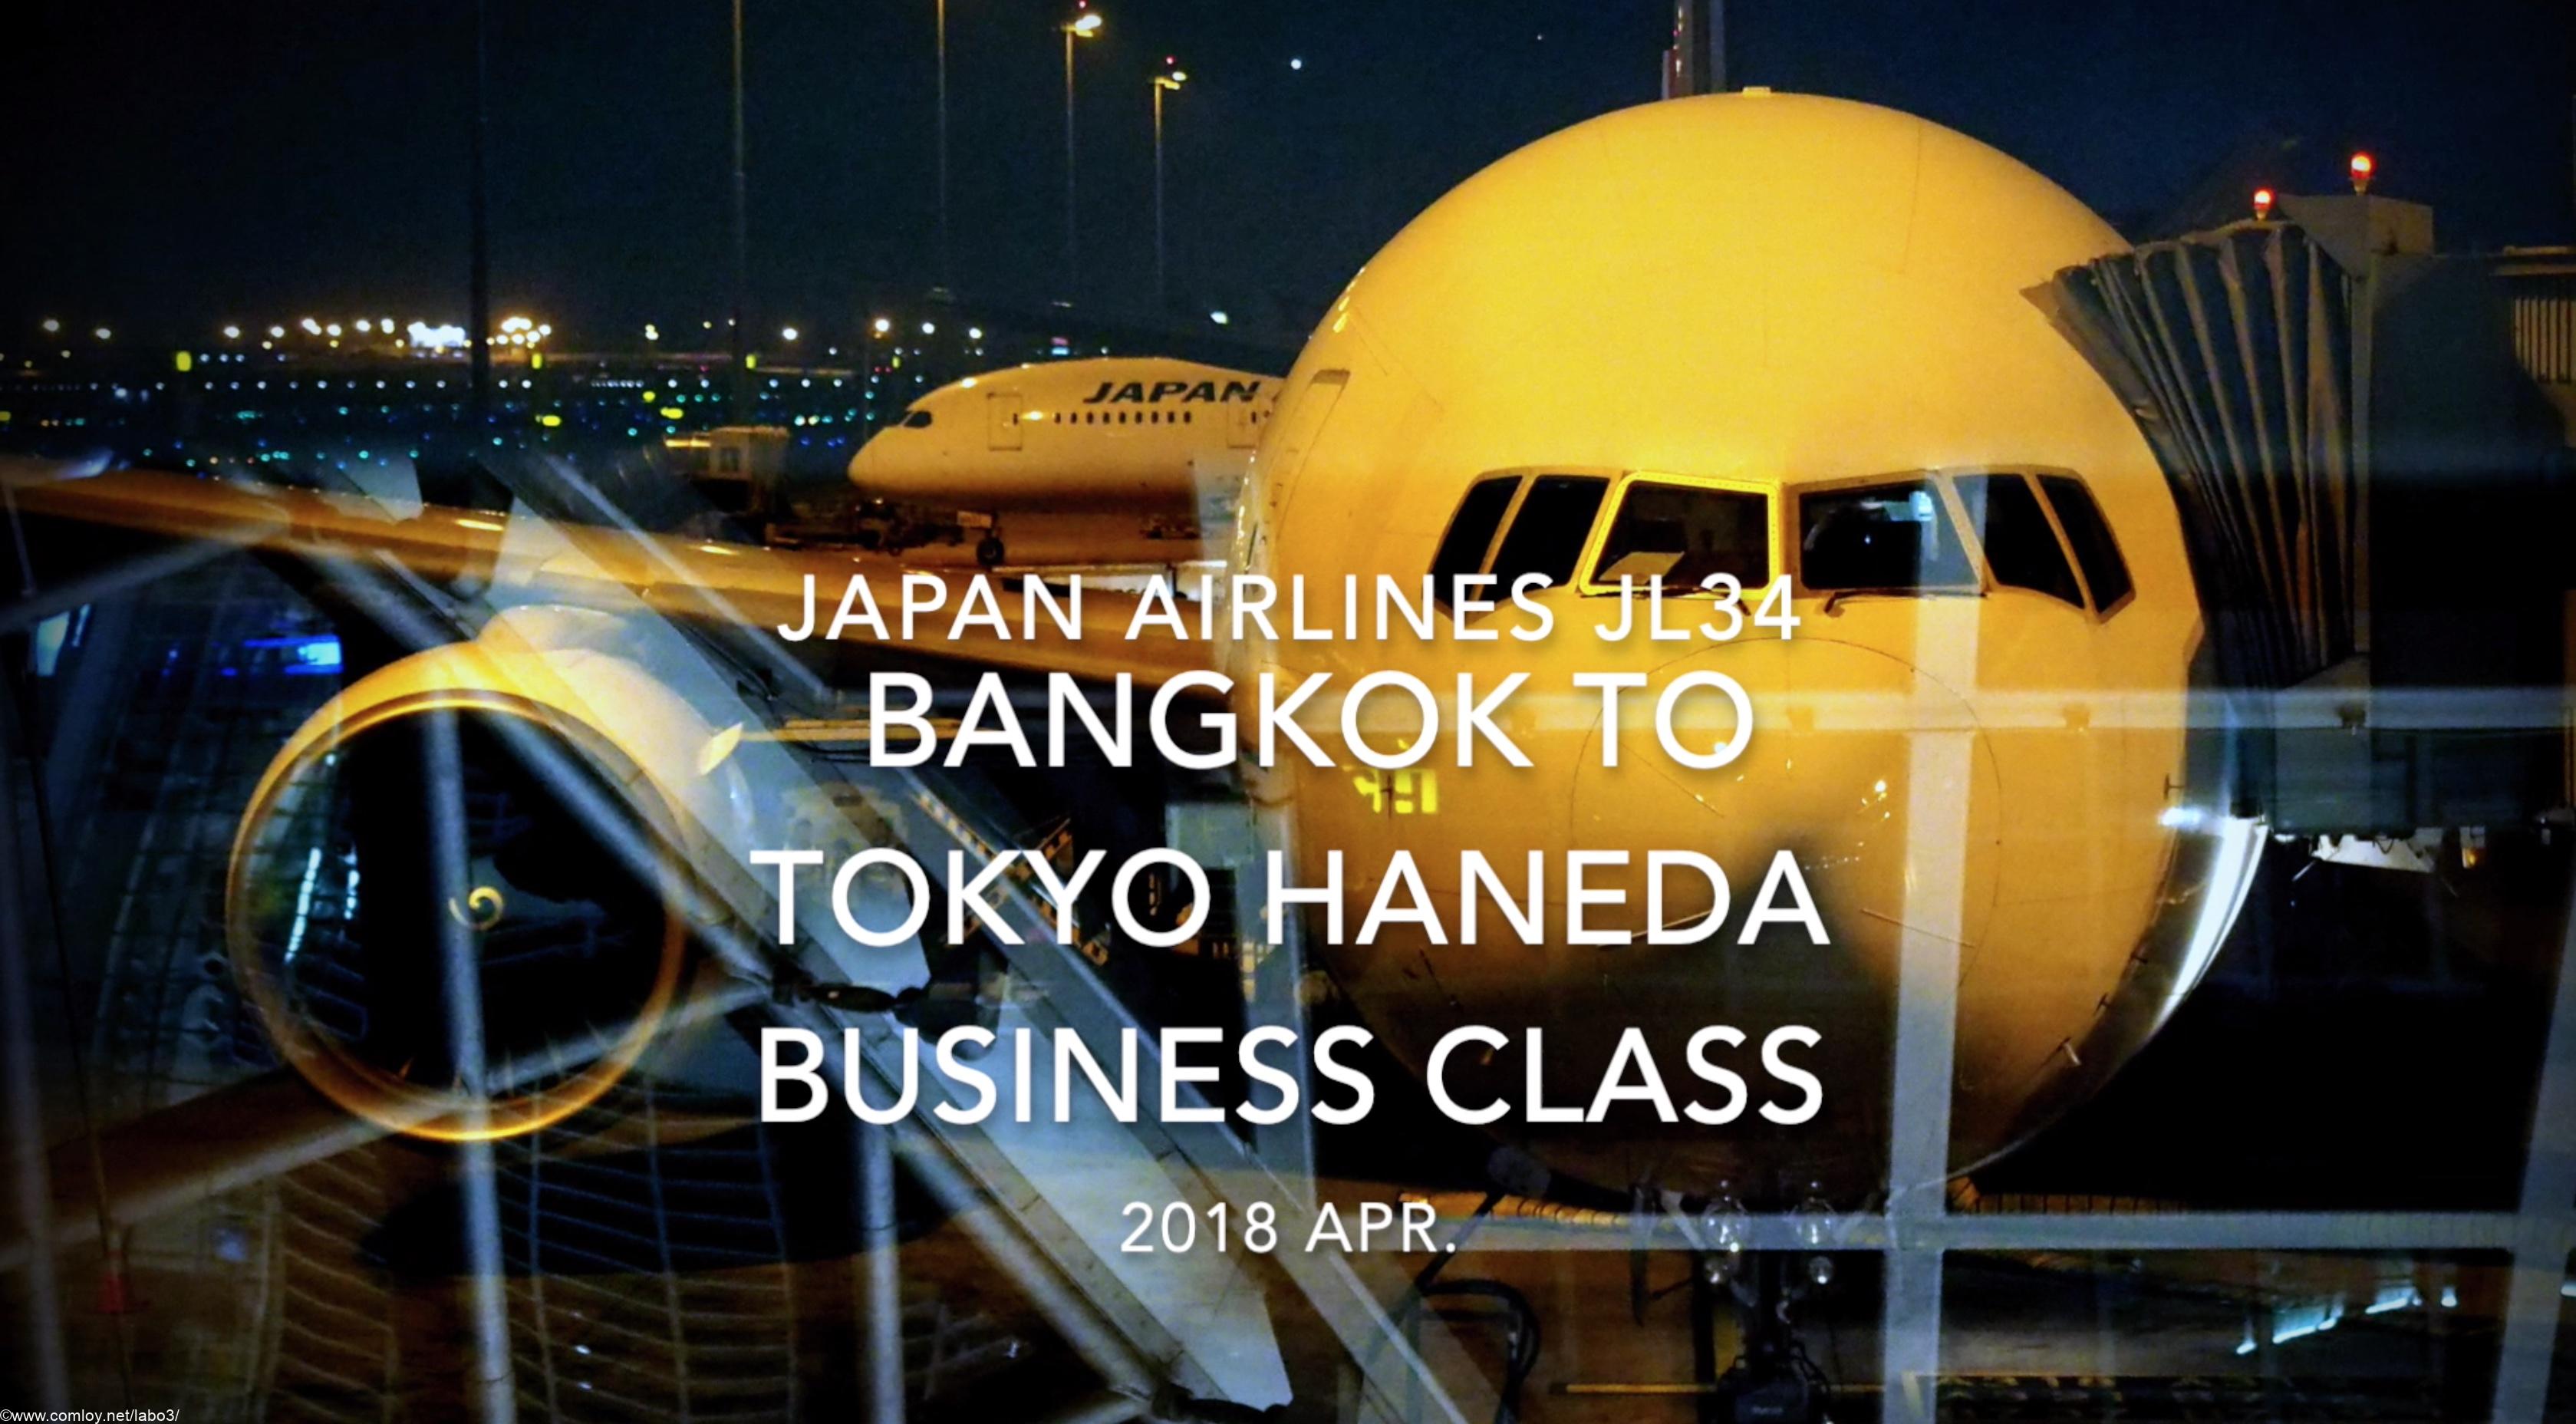 【Flight Report】Japan Airlines JL34 BANGKOK to TOKYO HANEDA Business Class 2018 APR 日本航空 バンコク - 羽田 搭乗記